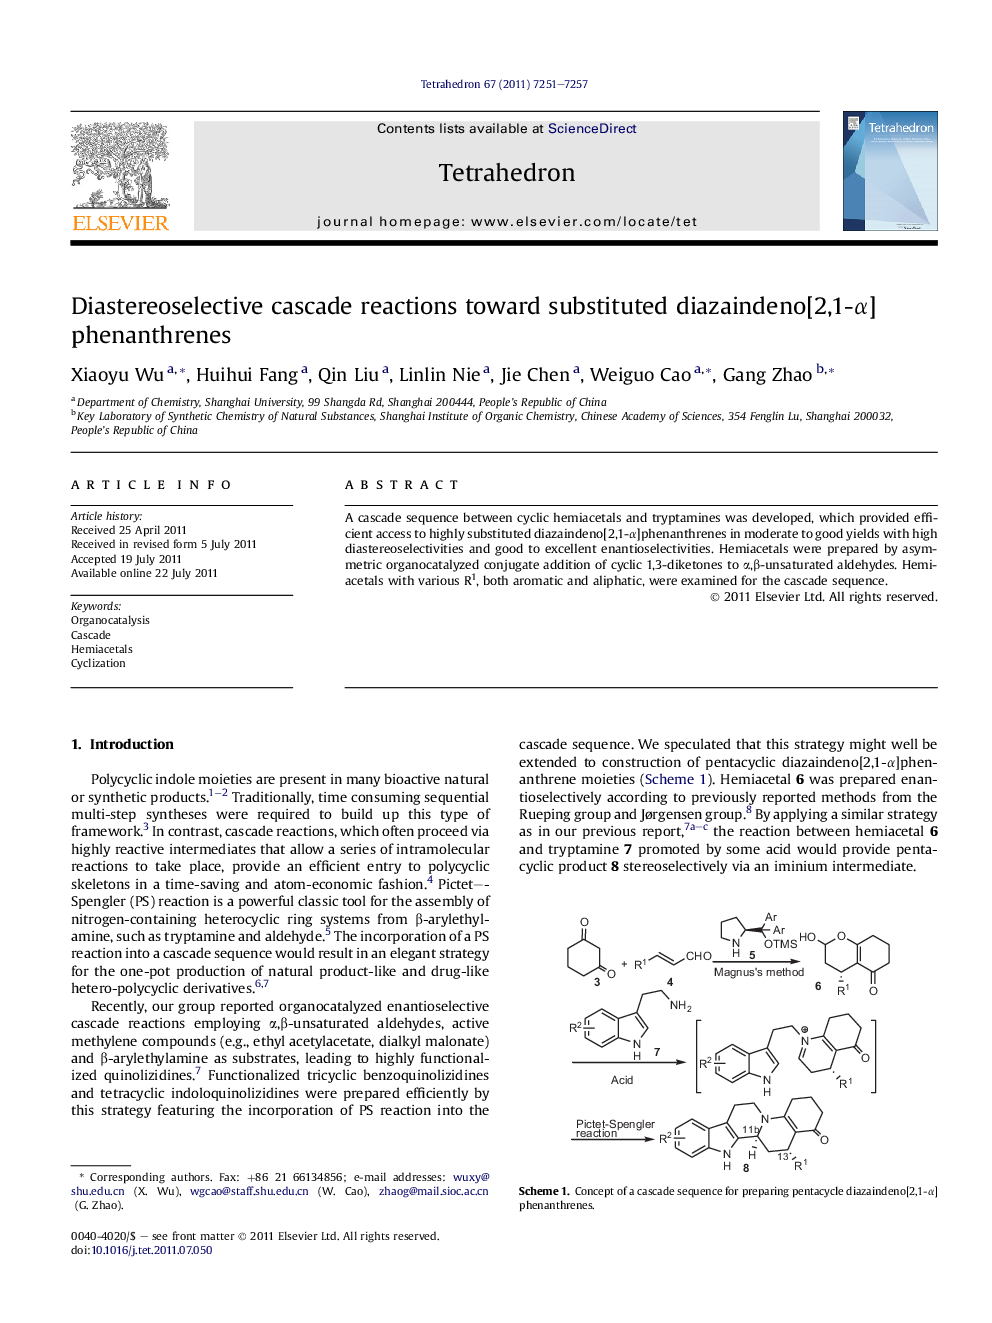 Diastereoselective cascade reactions toward substituted diazaindeno[2,1-Î±]phenanthrenes